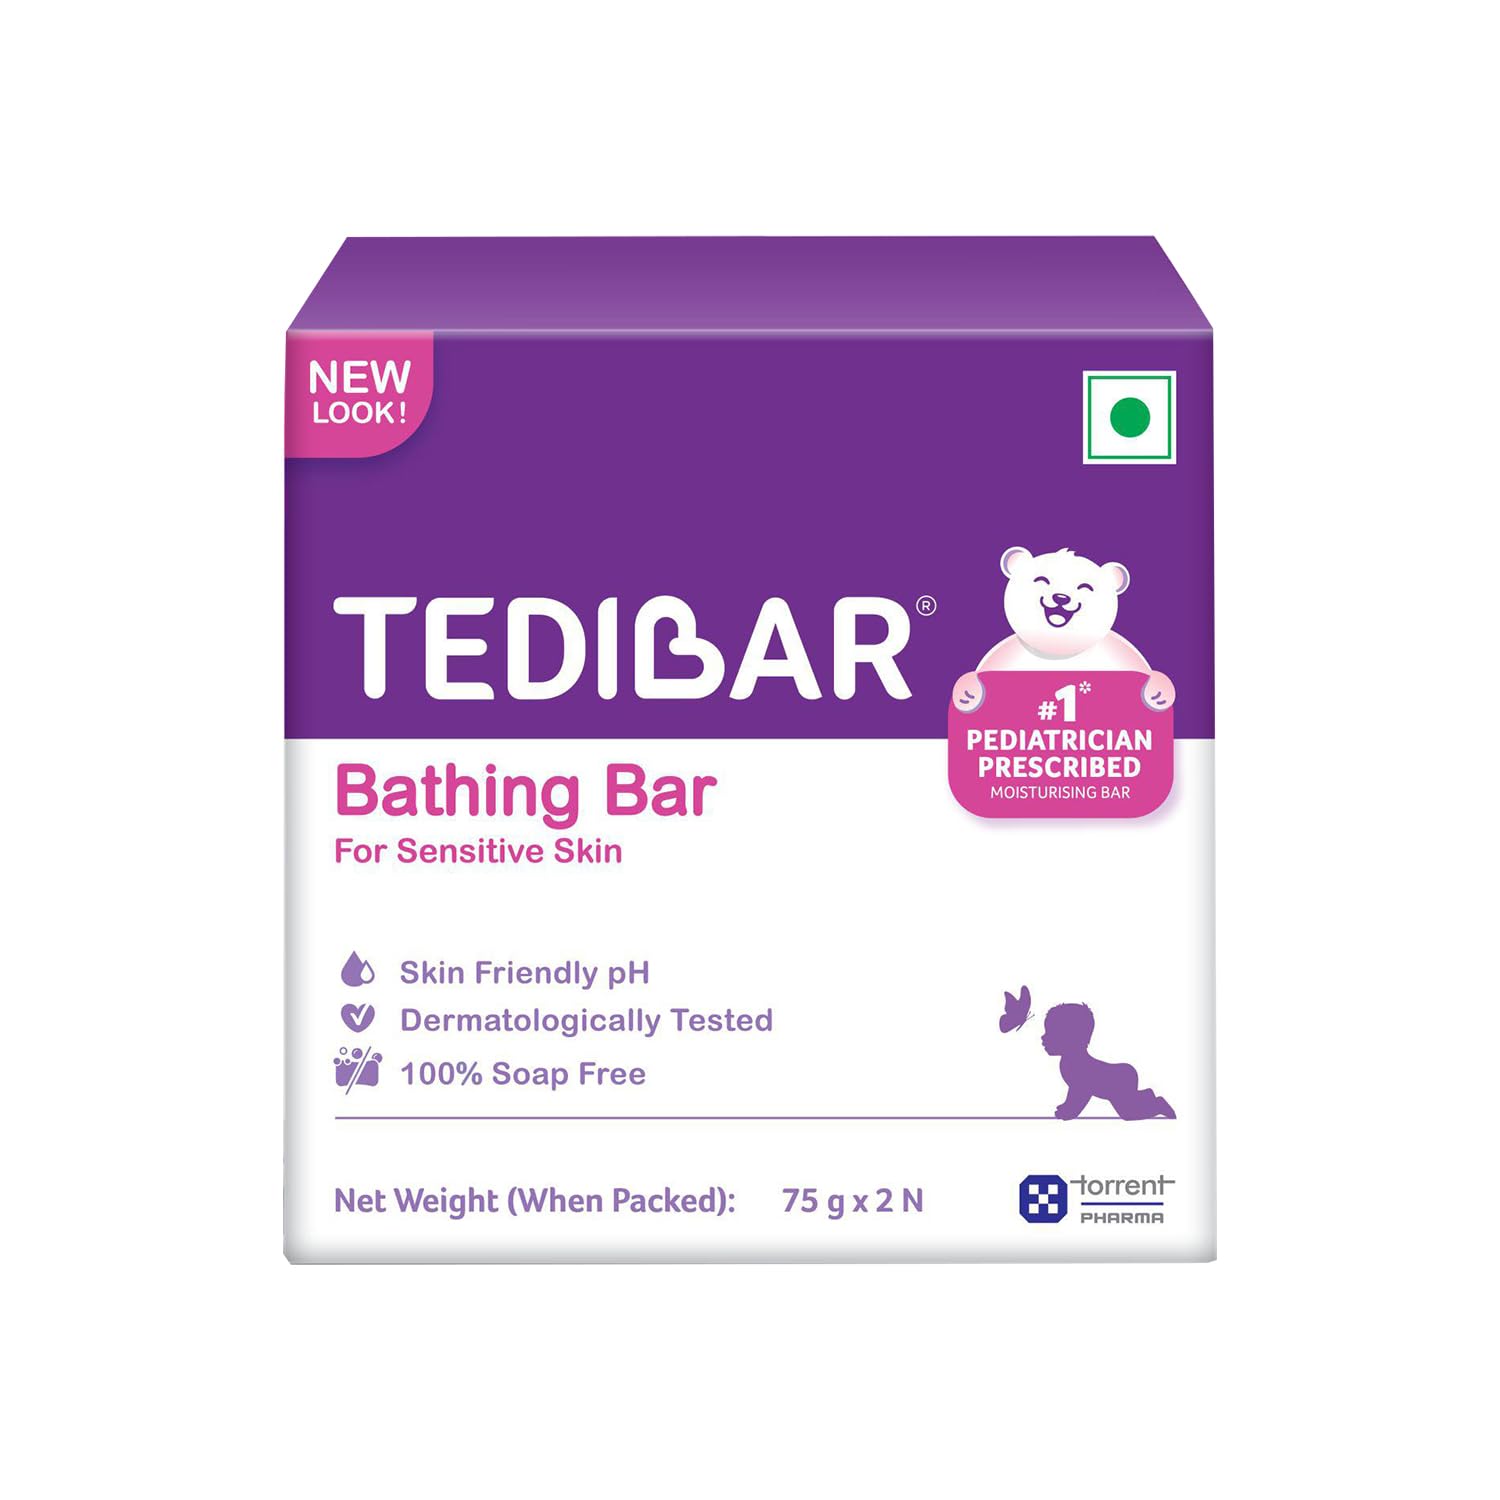 Tedibar Baby Soap